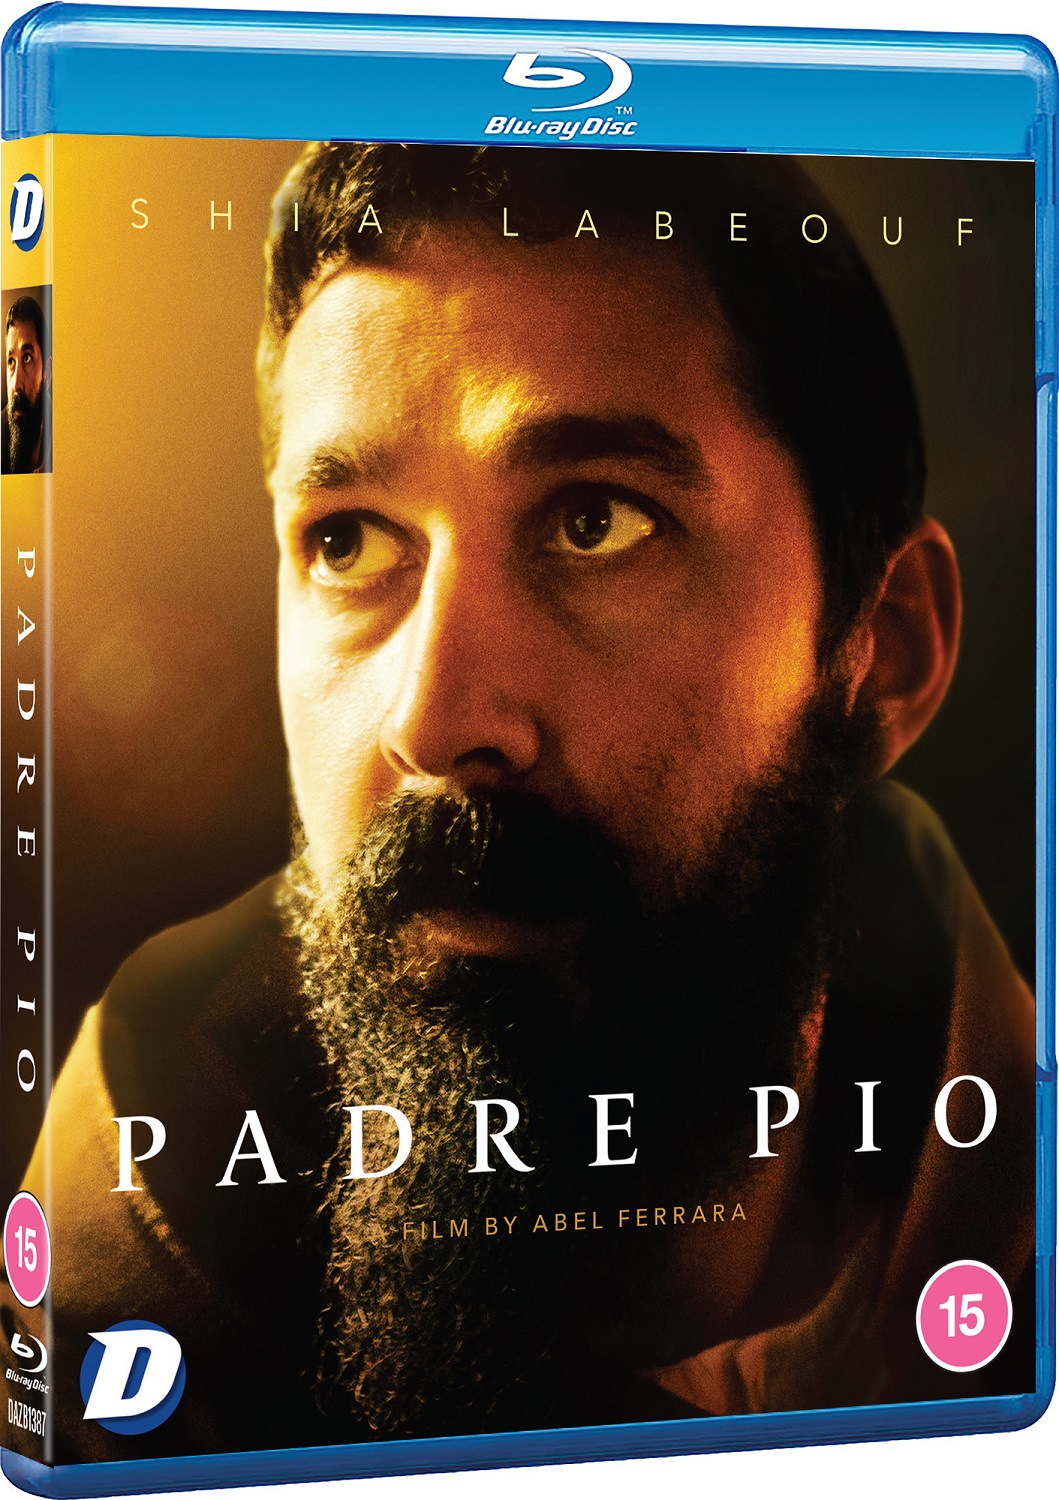 Padre Pio Blu-ray cover